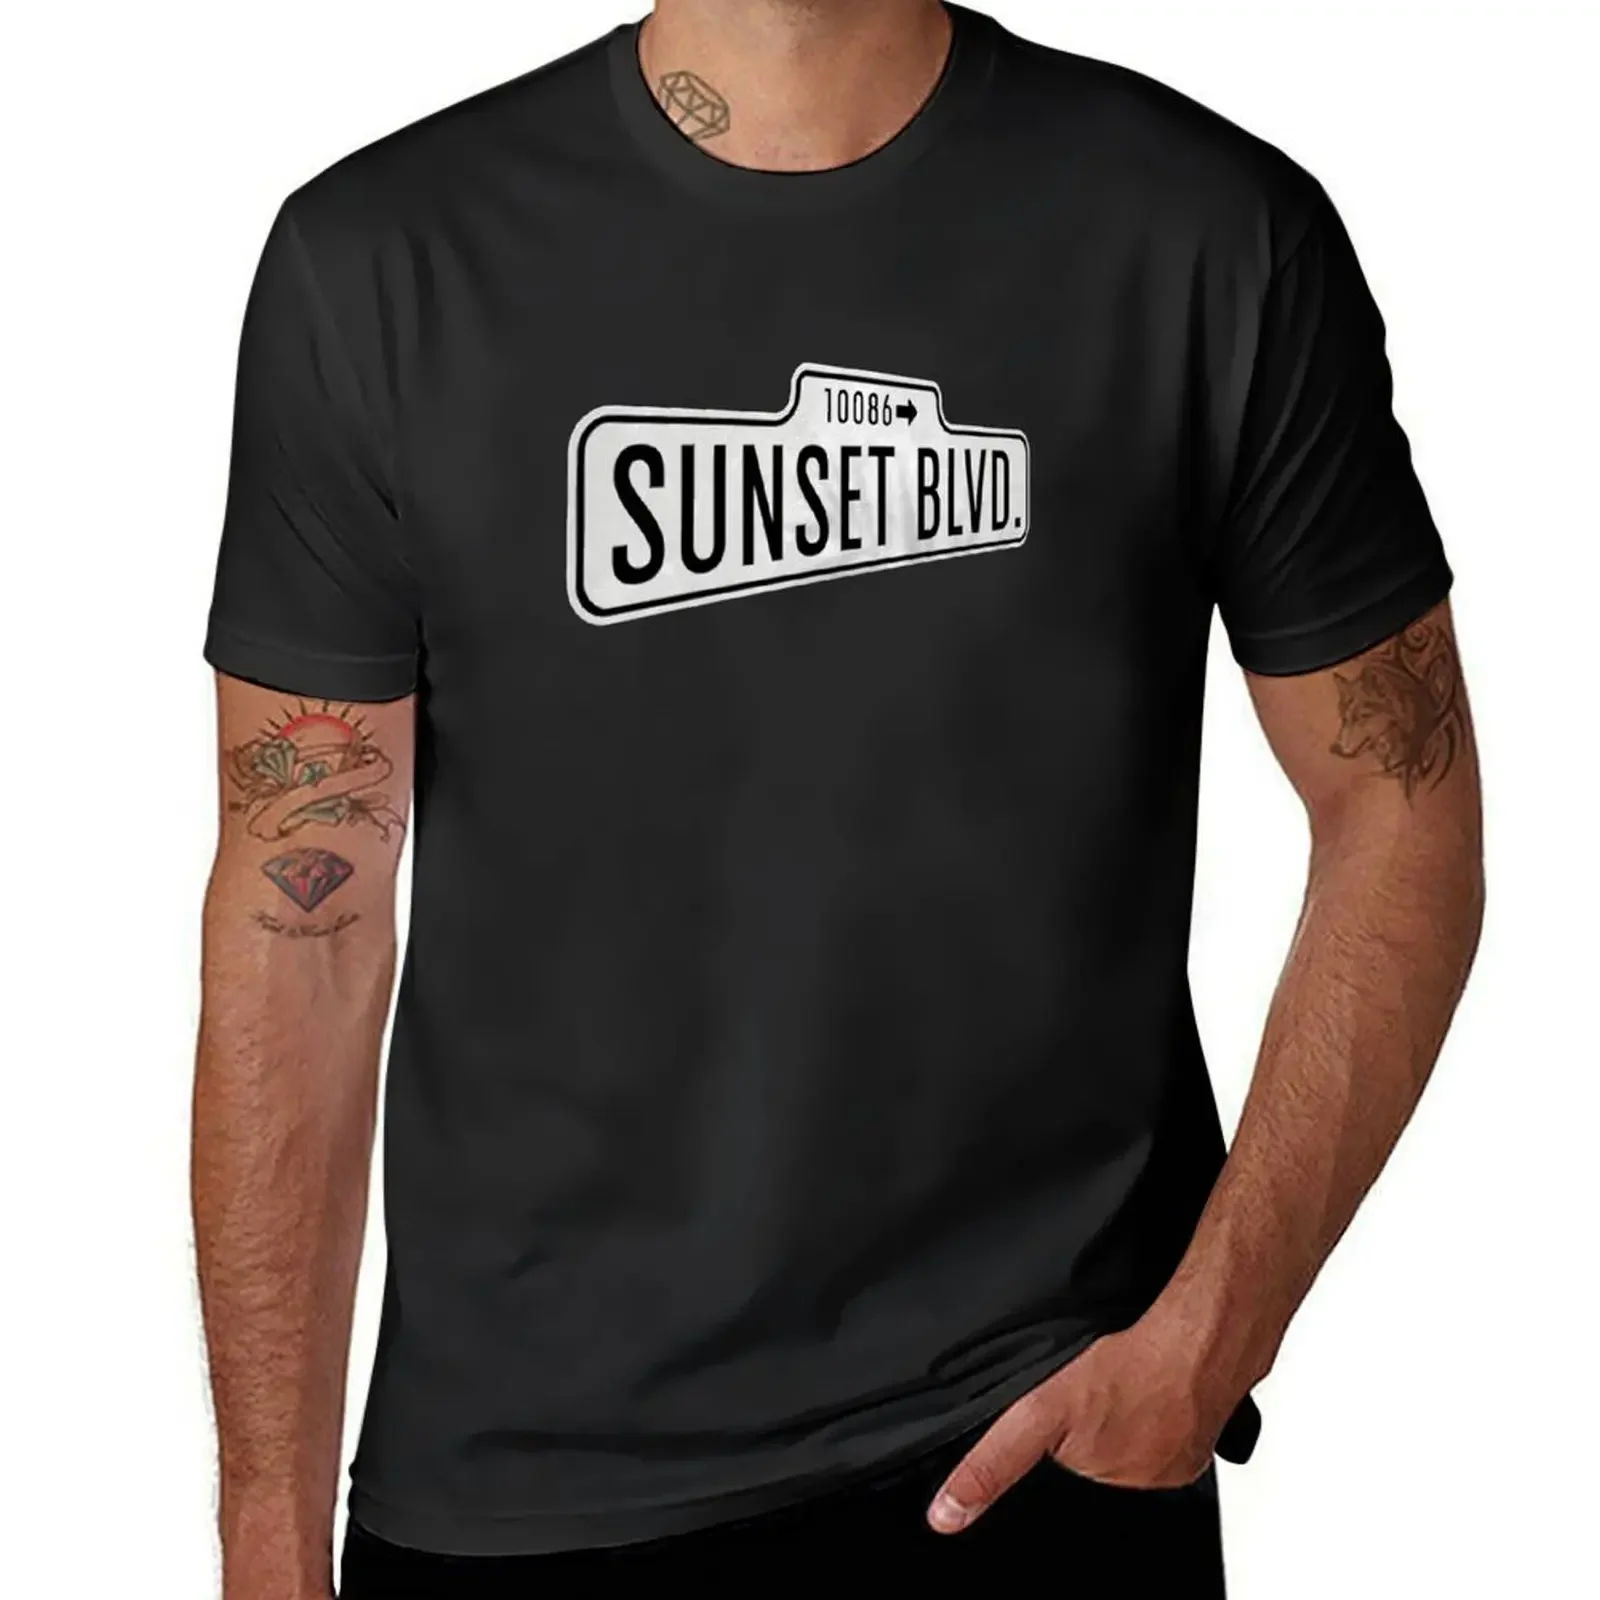 

Sunset Blvd T-shirt plain tees vintage clothes t shirts for men pack